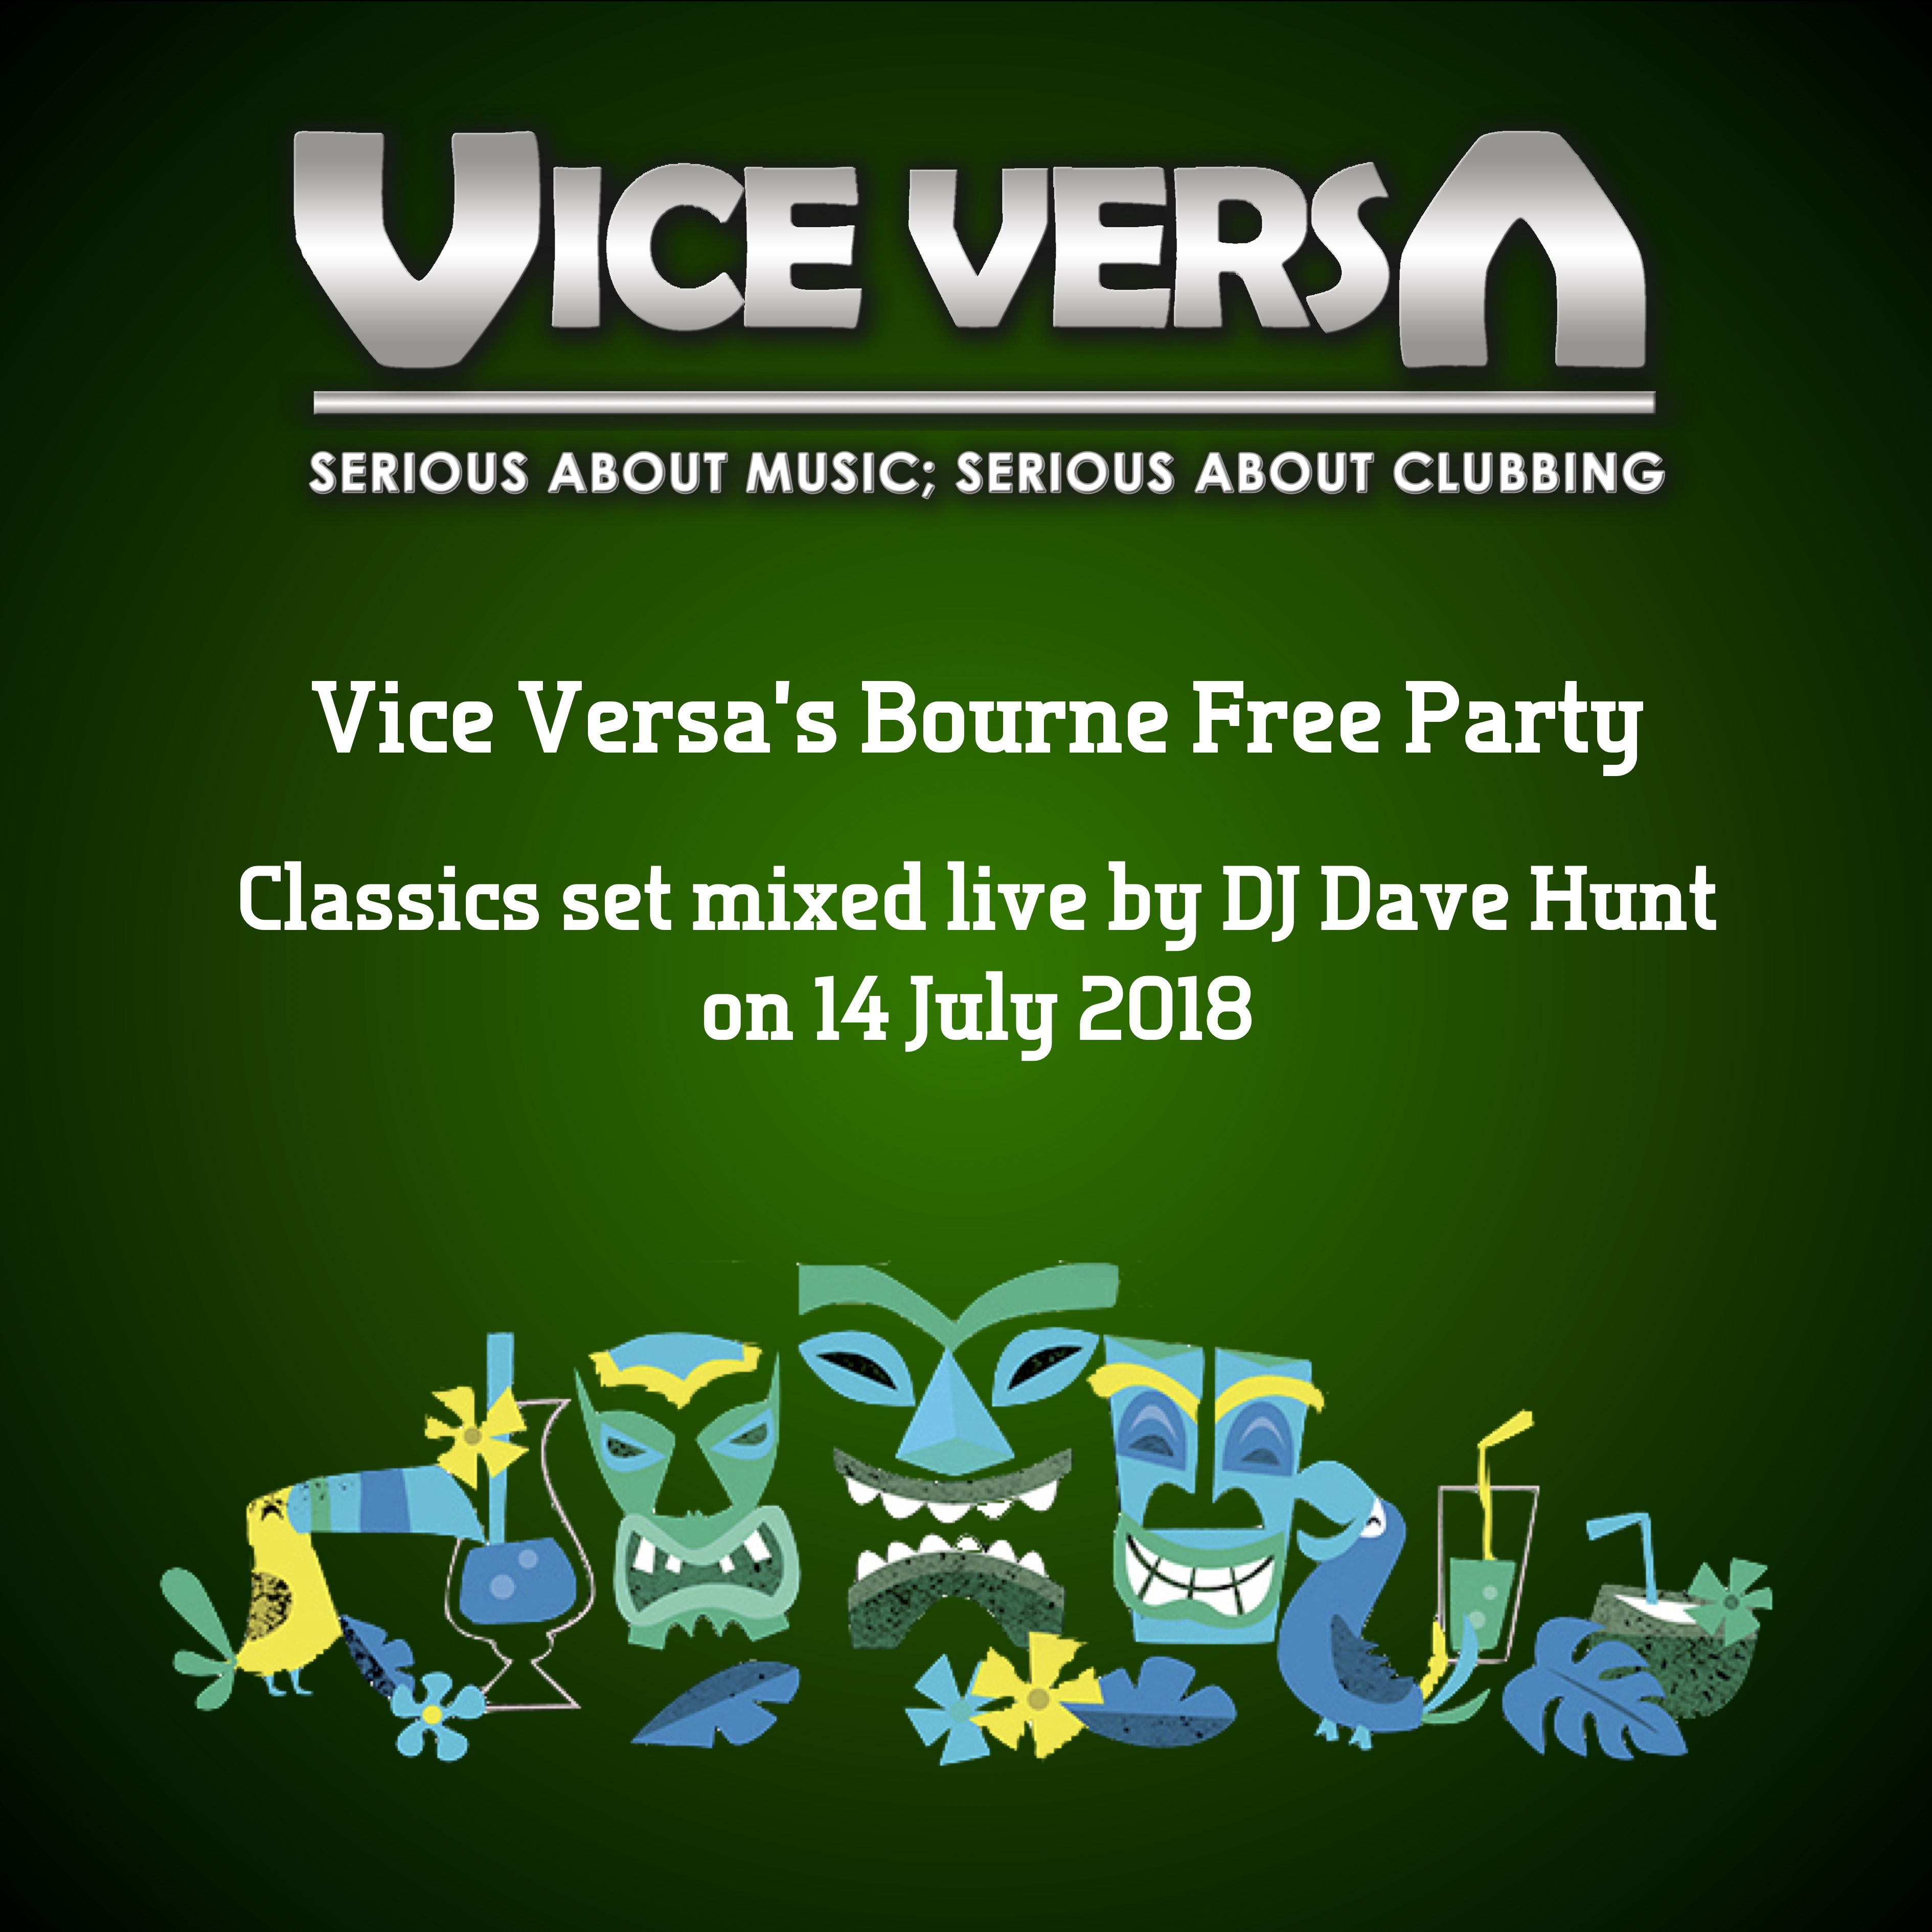 Vice Versa Bourne Free 2018 classics set mixed live by DJ Dave Hunt